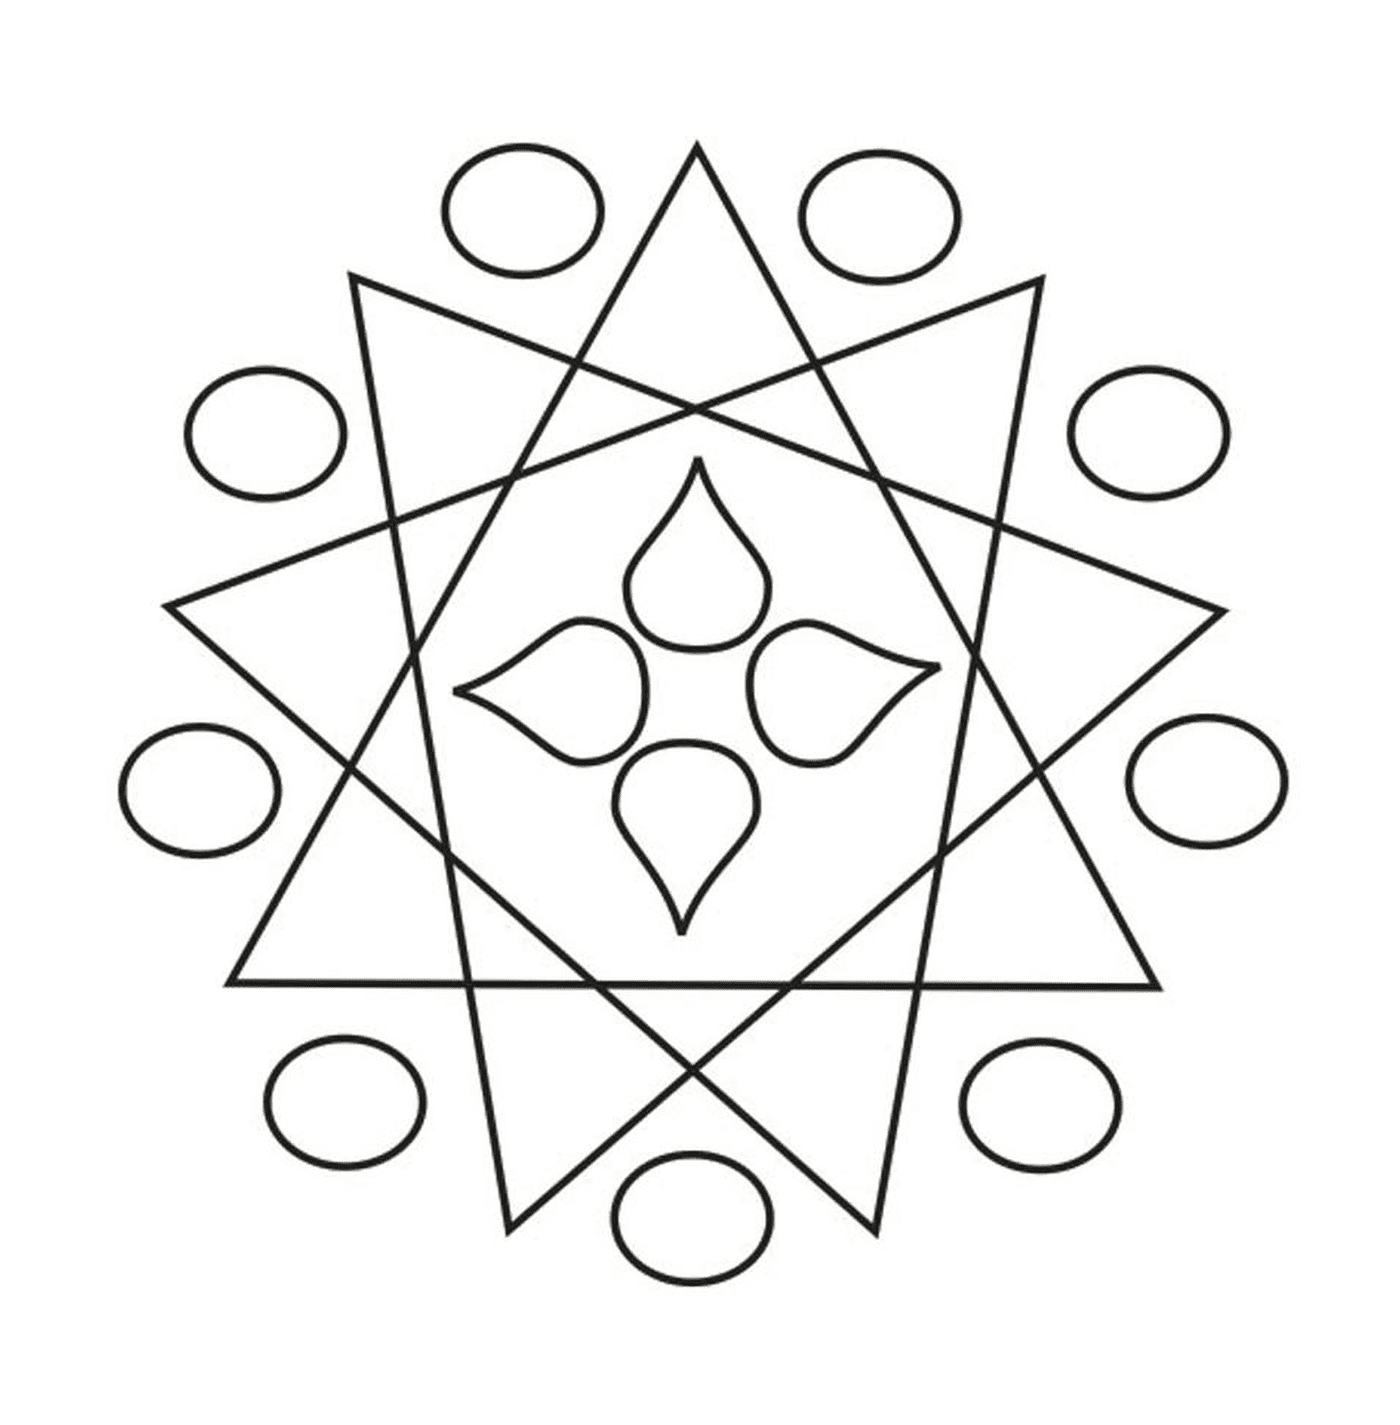  A geometric drawing 